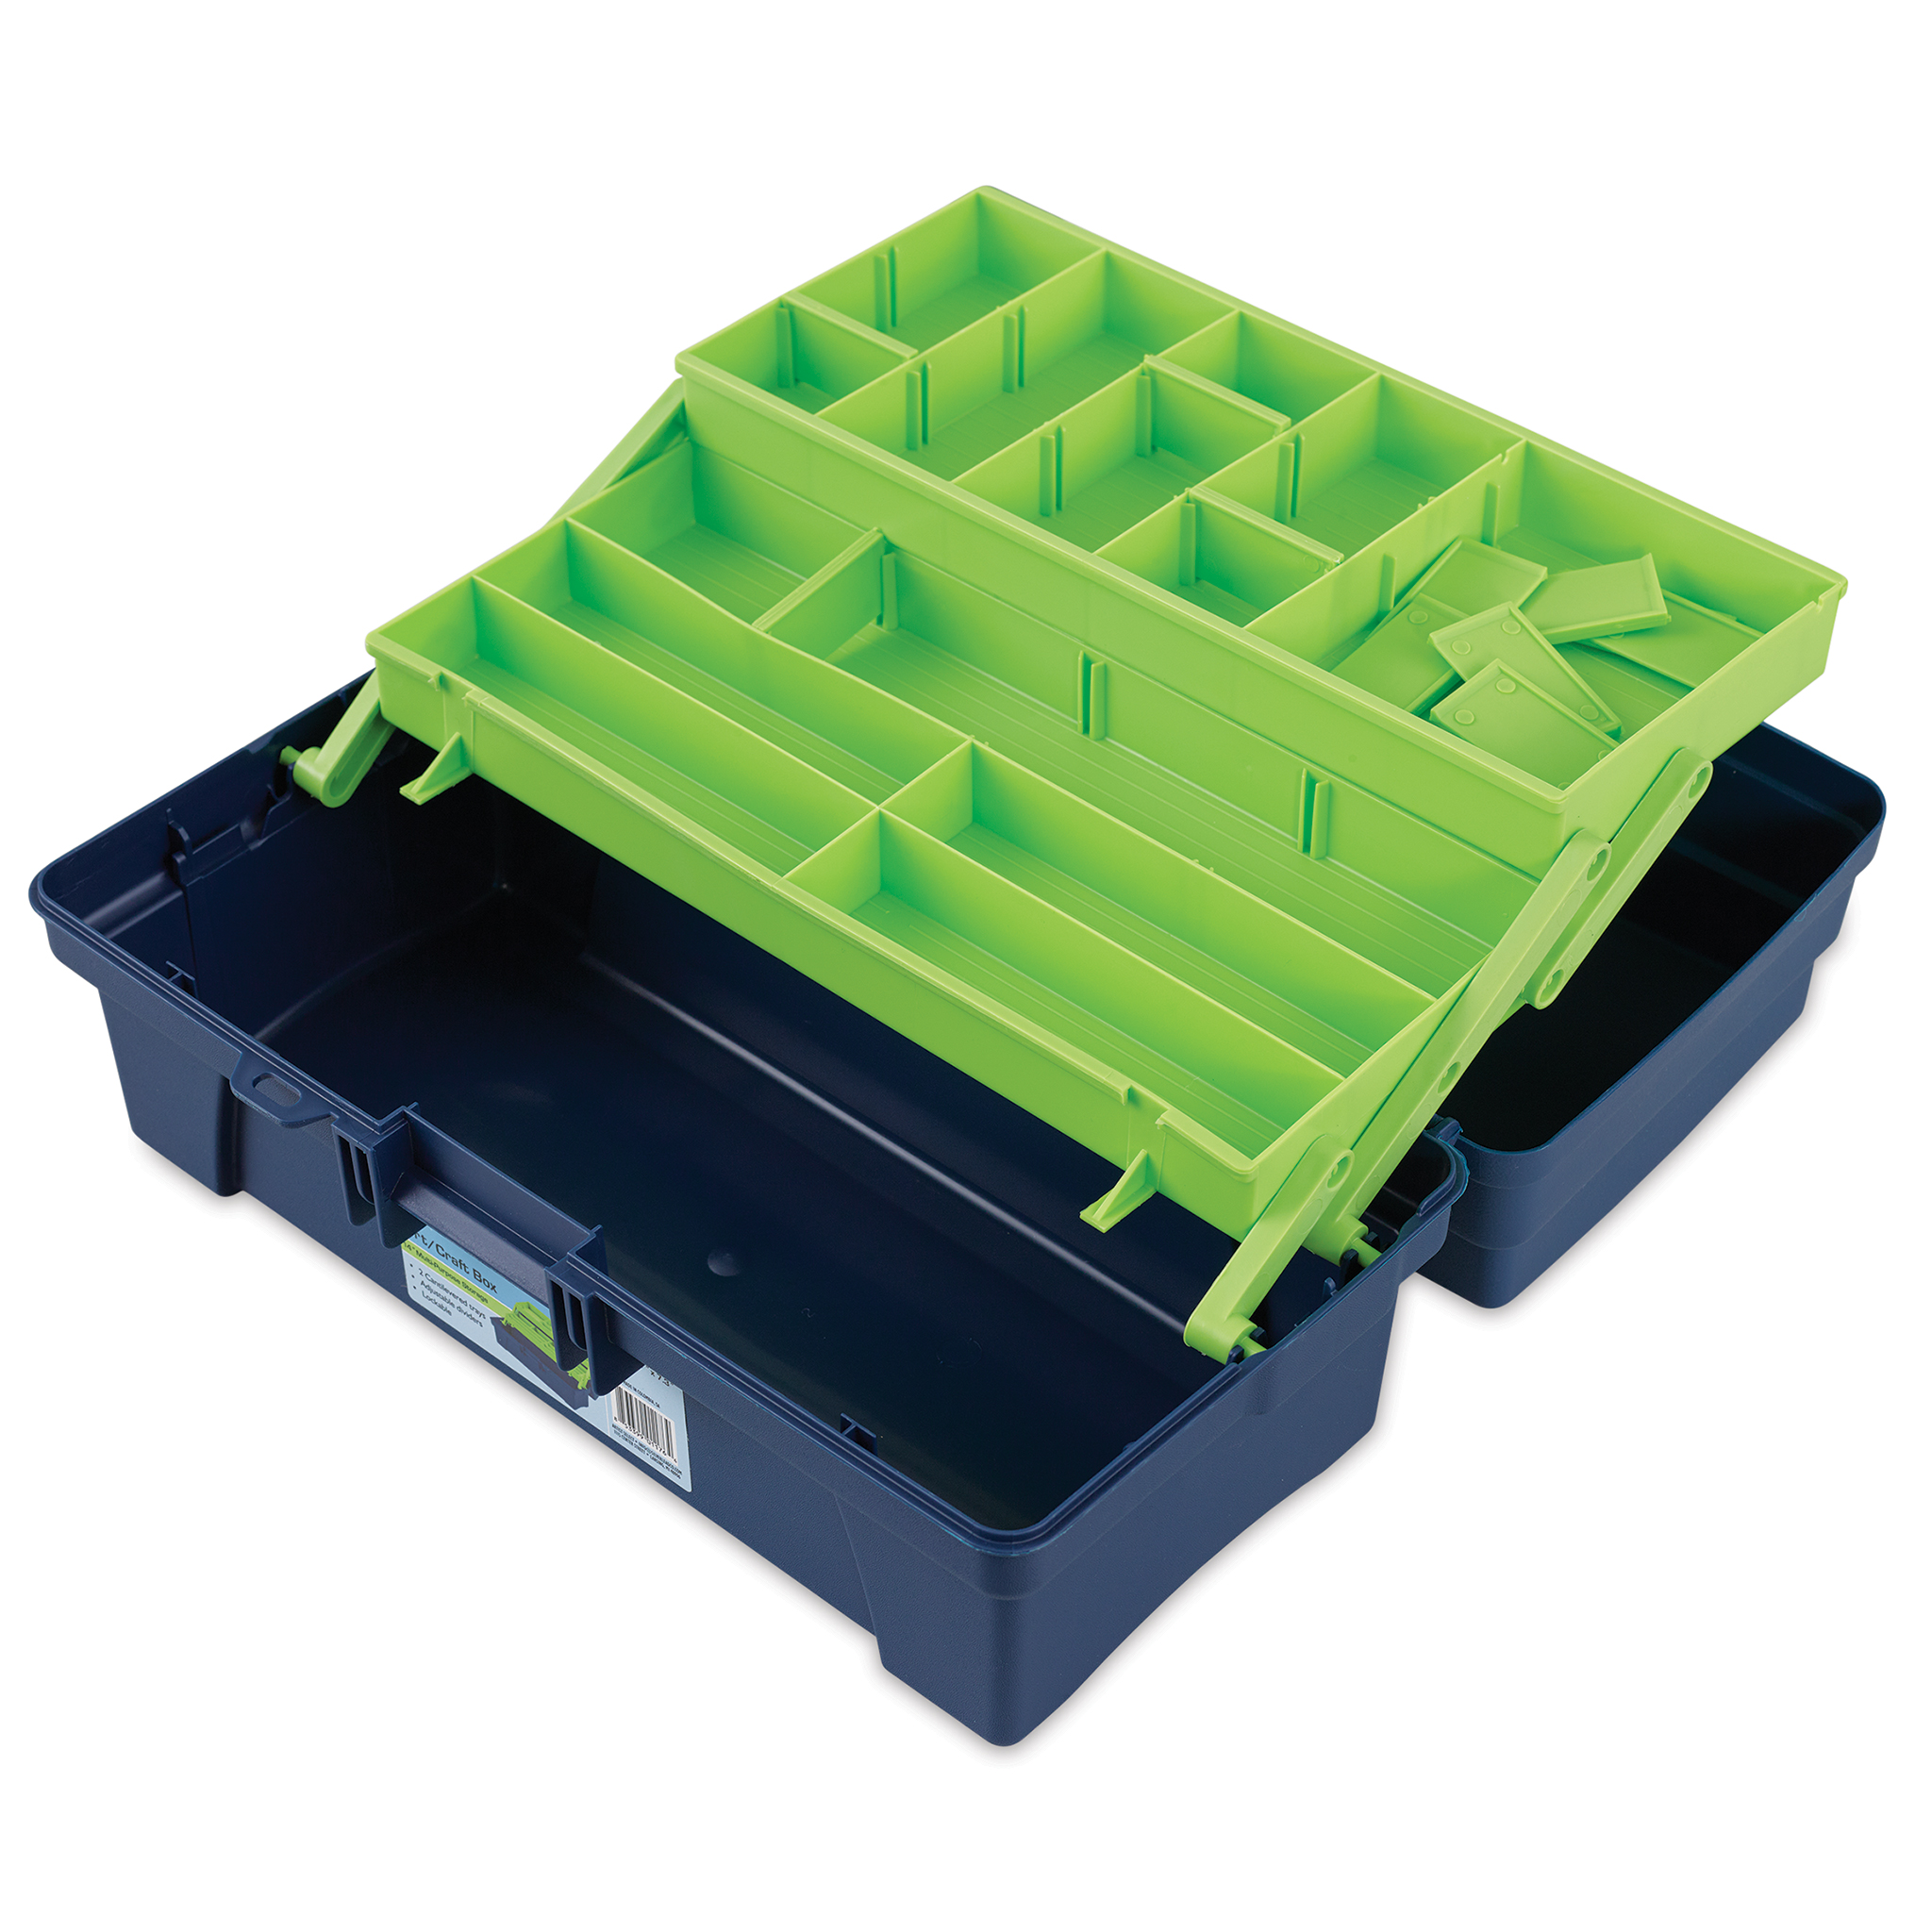 Artist Select Plastic Box - 8 x 7 x 14, Blue/Green Trim, 2 Tray